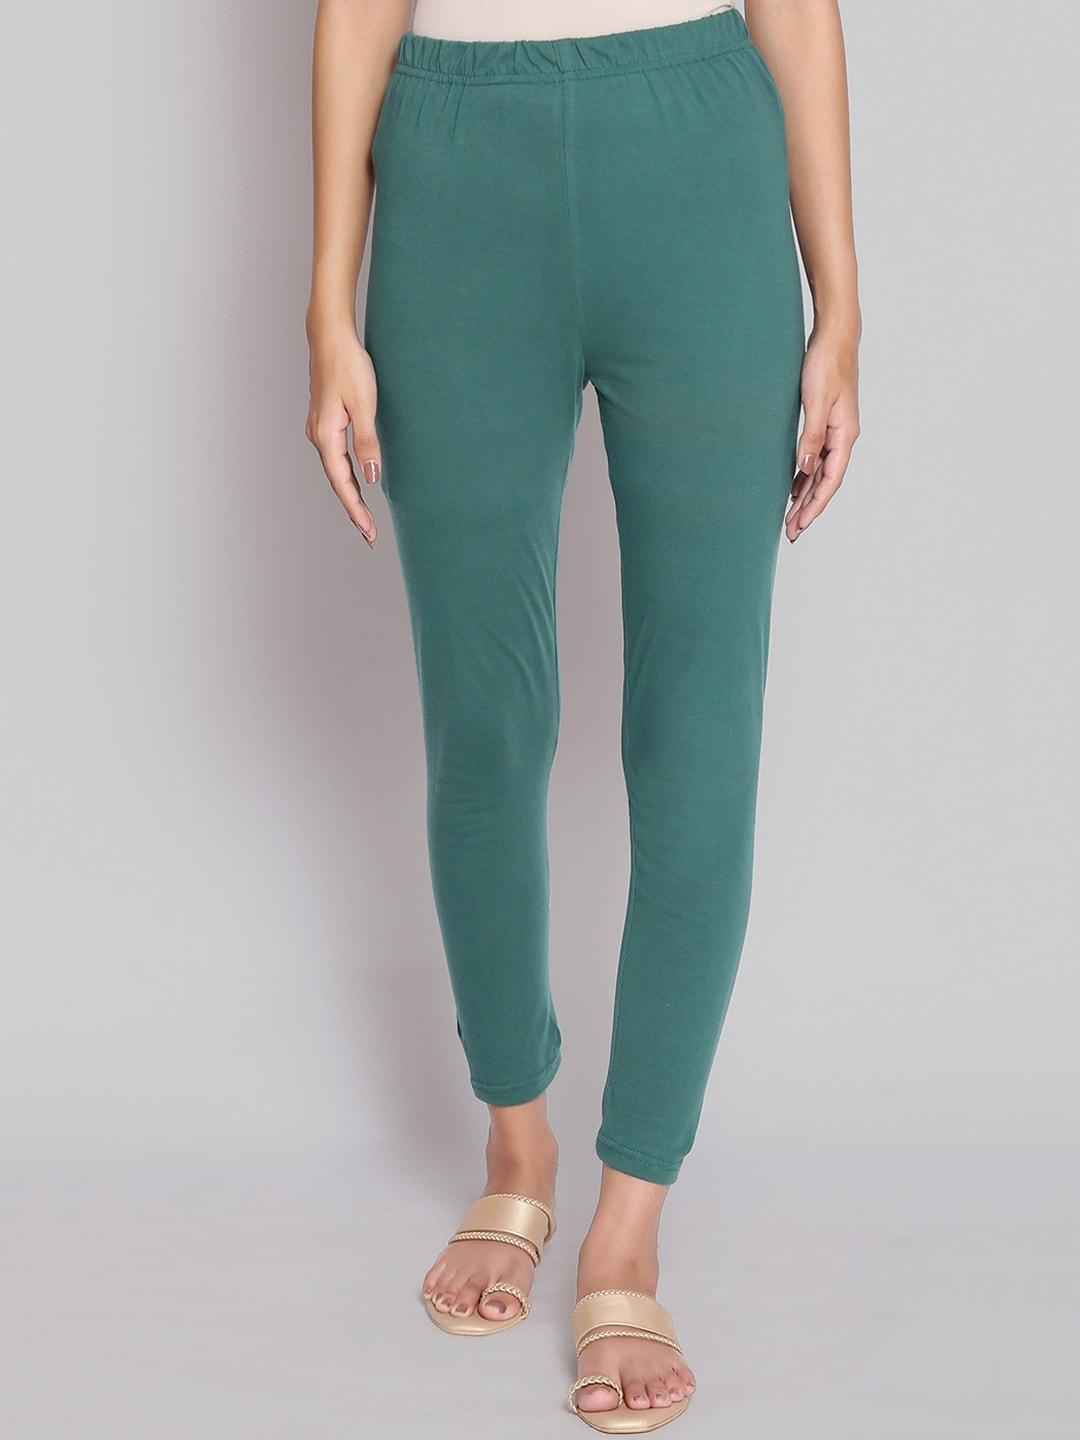 aurelia-women-green-solid-ankle-length-leggings